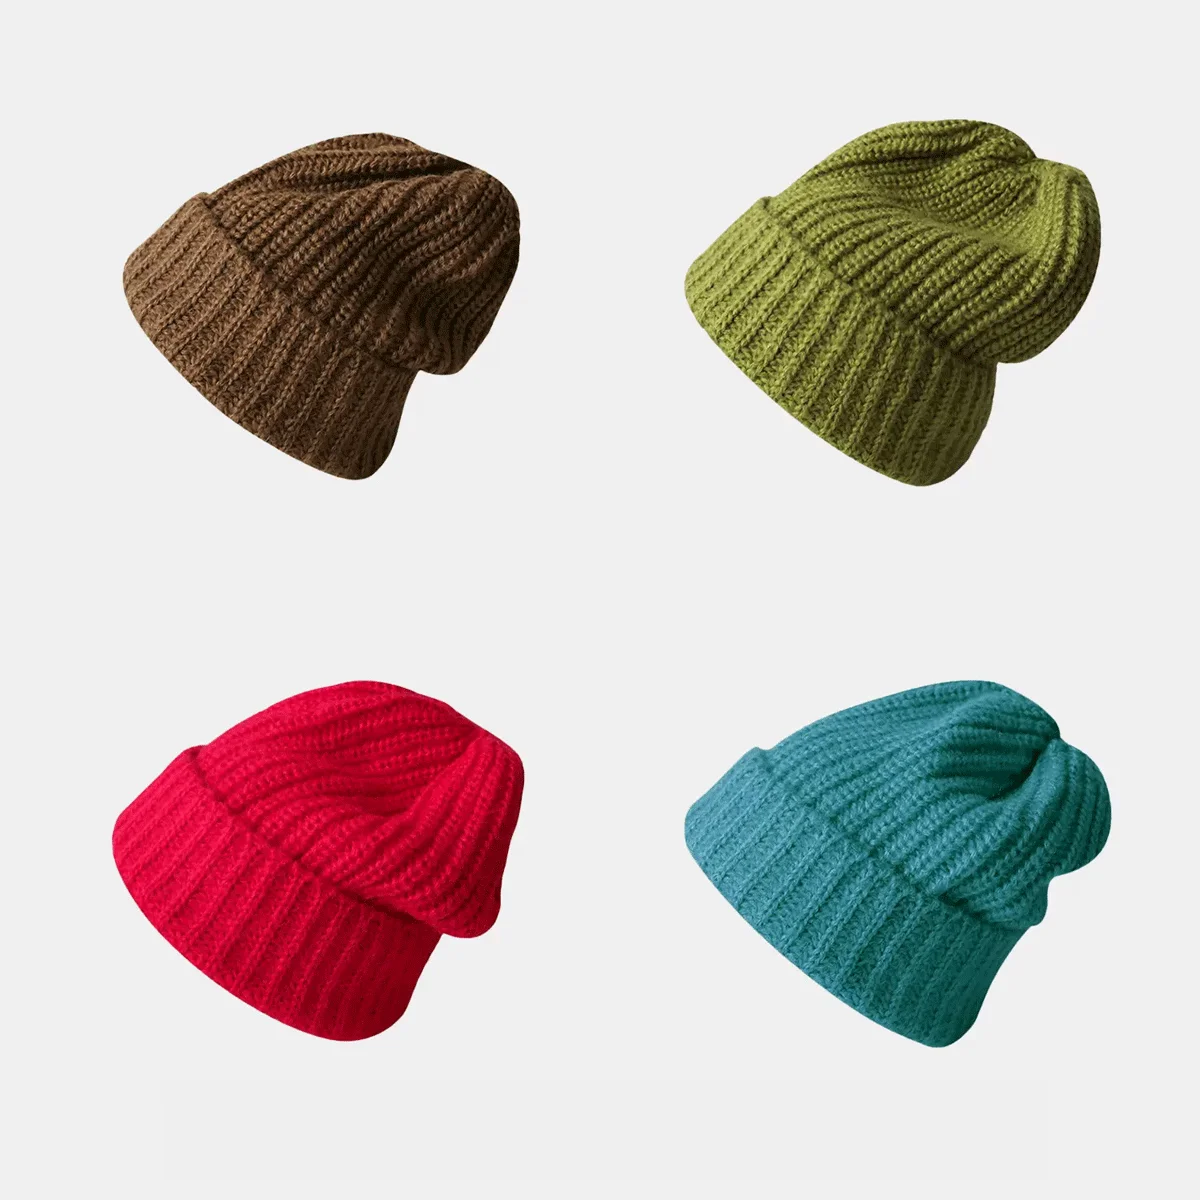 

New Oem Acrylic Fashion Design Men Women Warm Blend Slouchy Cuff Woven Label Ski Beanie Cap Skull Knit Winter Hat